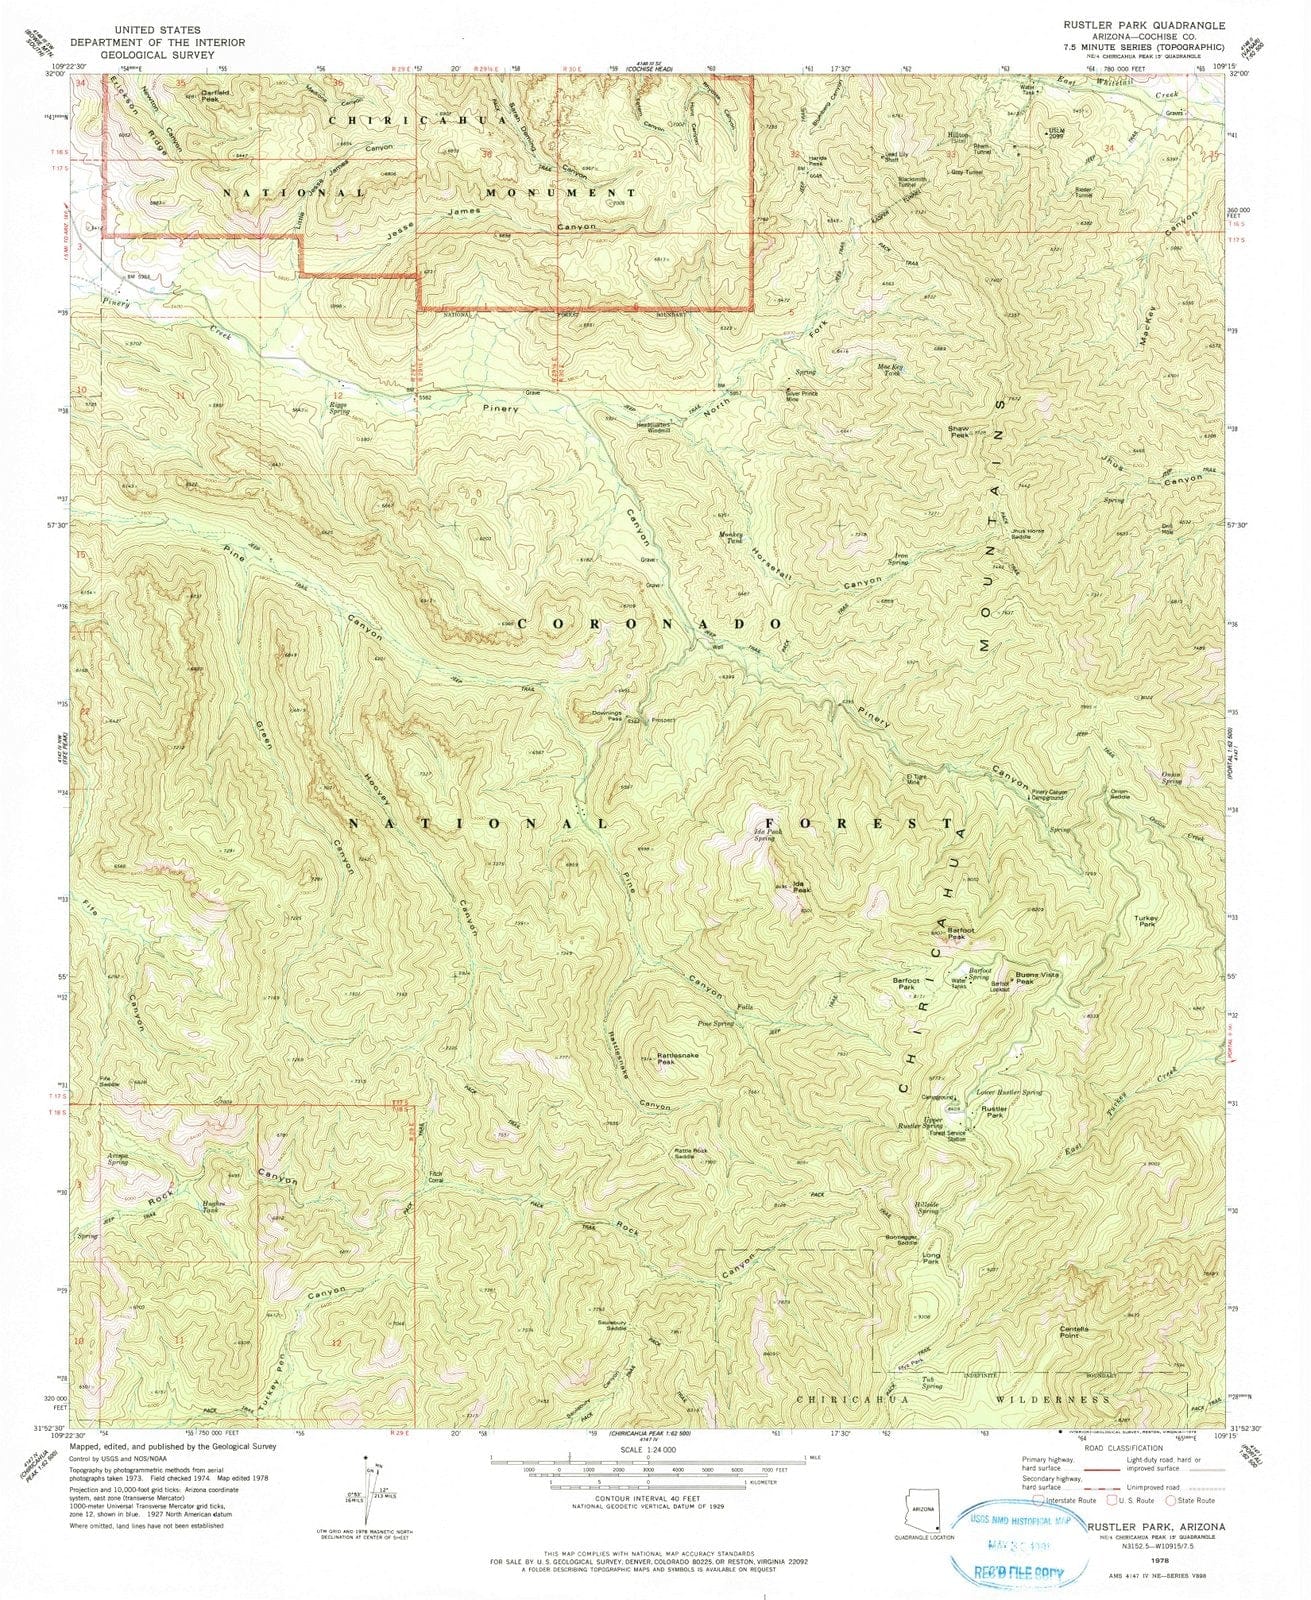 1978 Rustler Park, AZ - Arizona - USGS Topographic Map